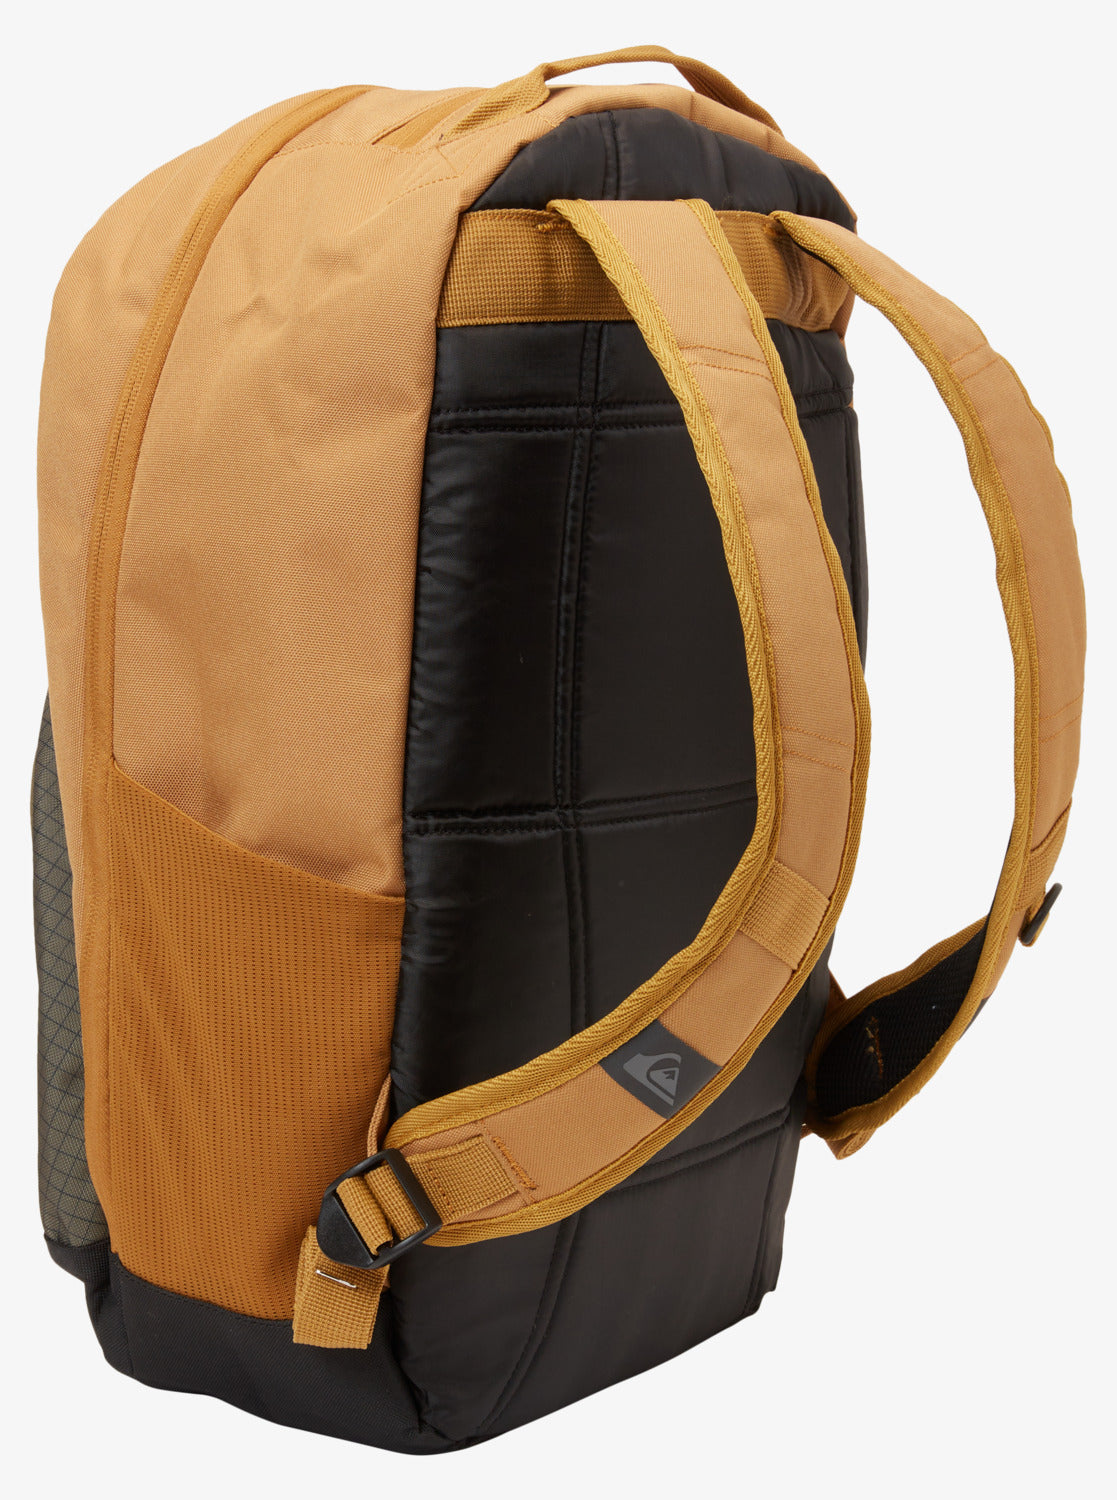 Quiksilver Schoolie Cooler 2.0 30L Backpack from back